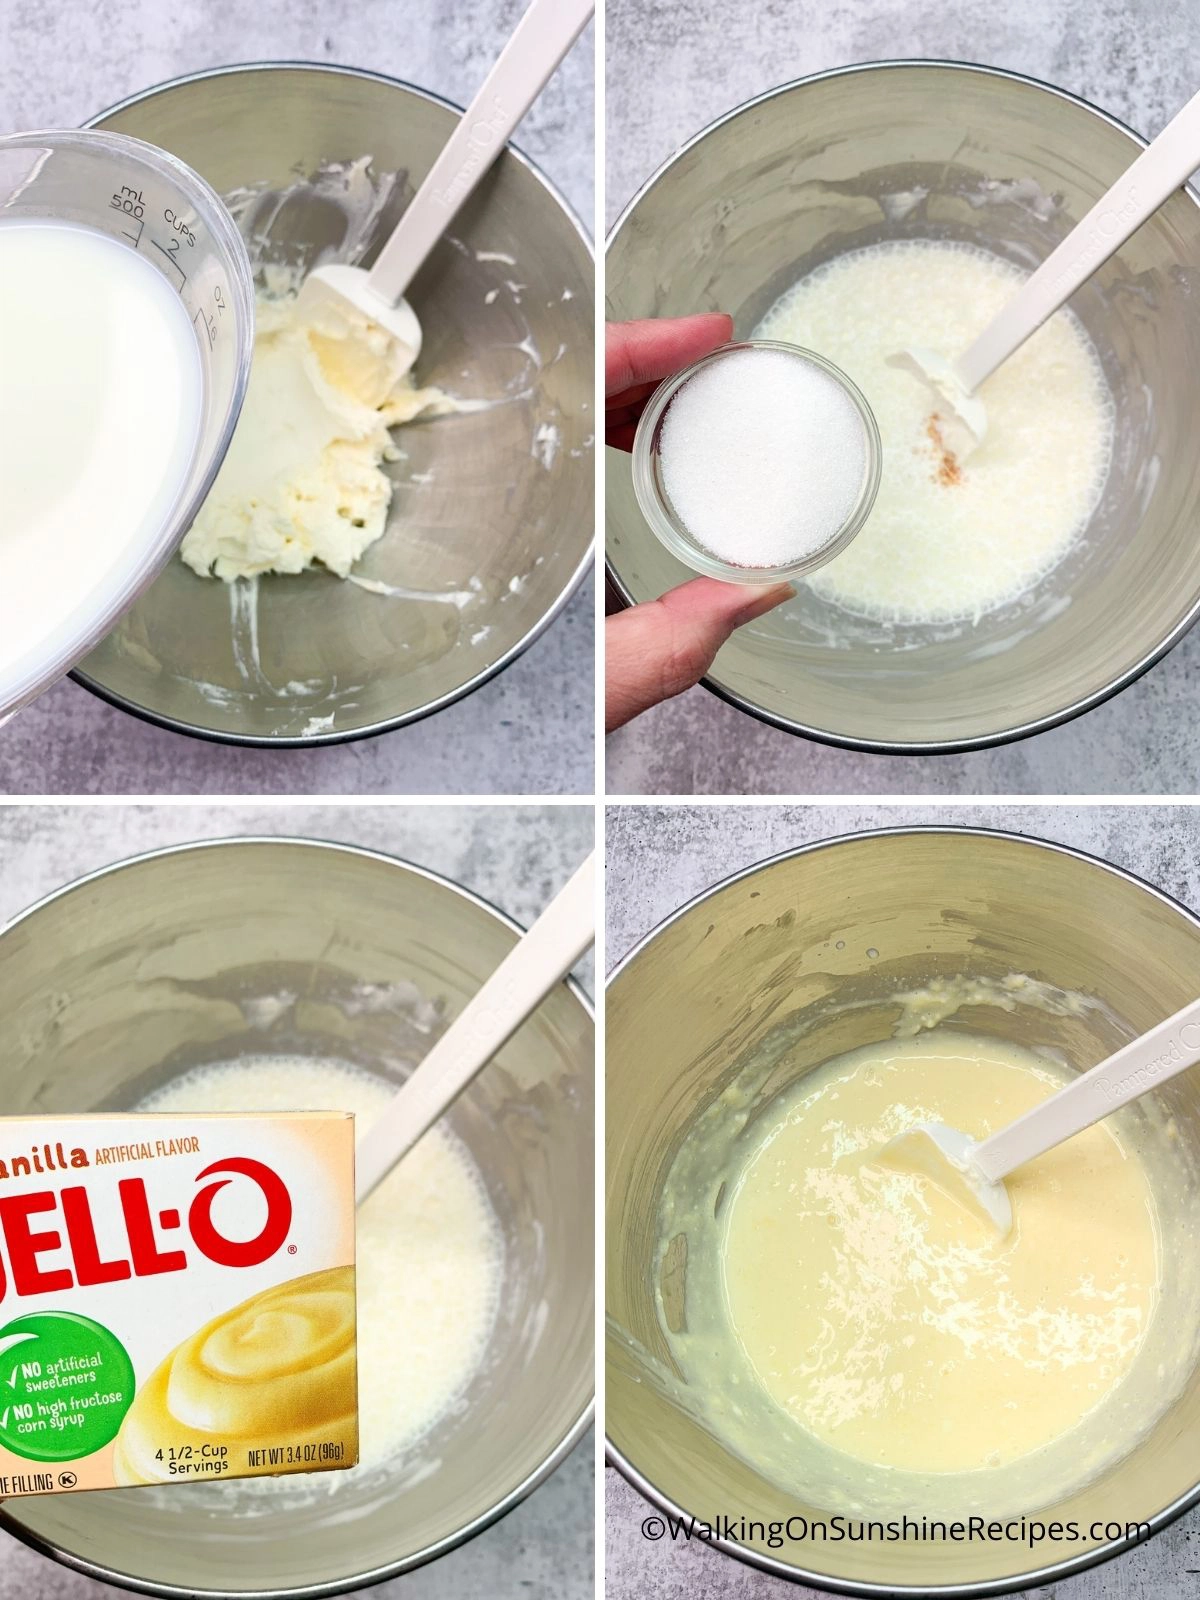 Add pudding mix, milk, sugar to mixing bowl.